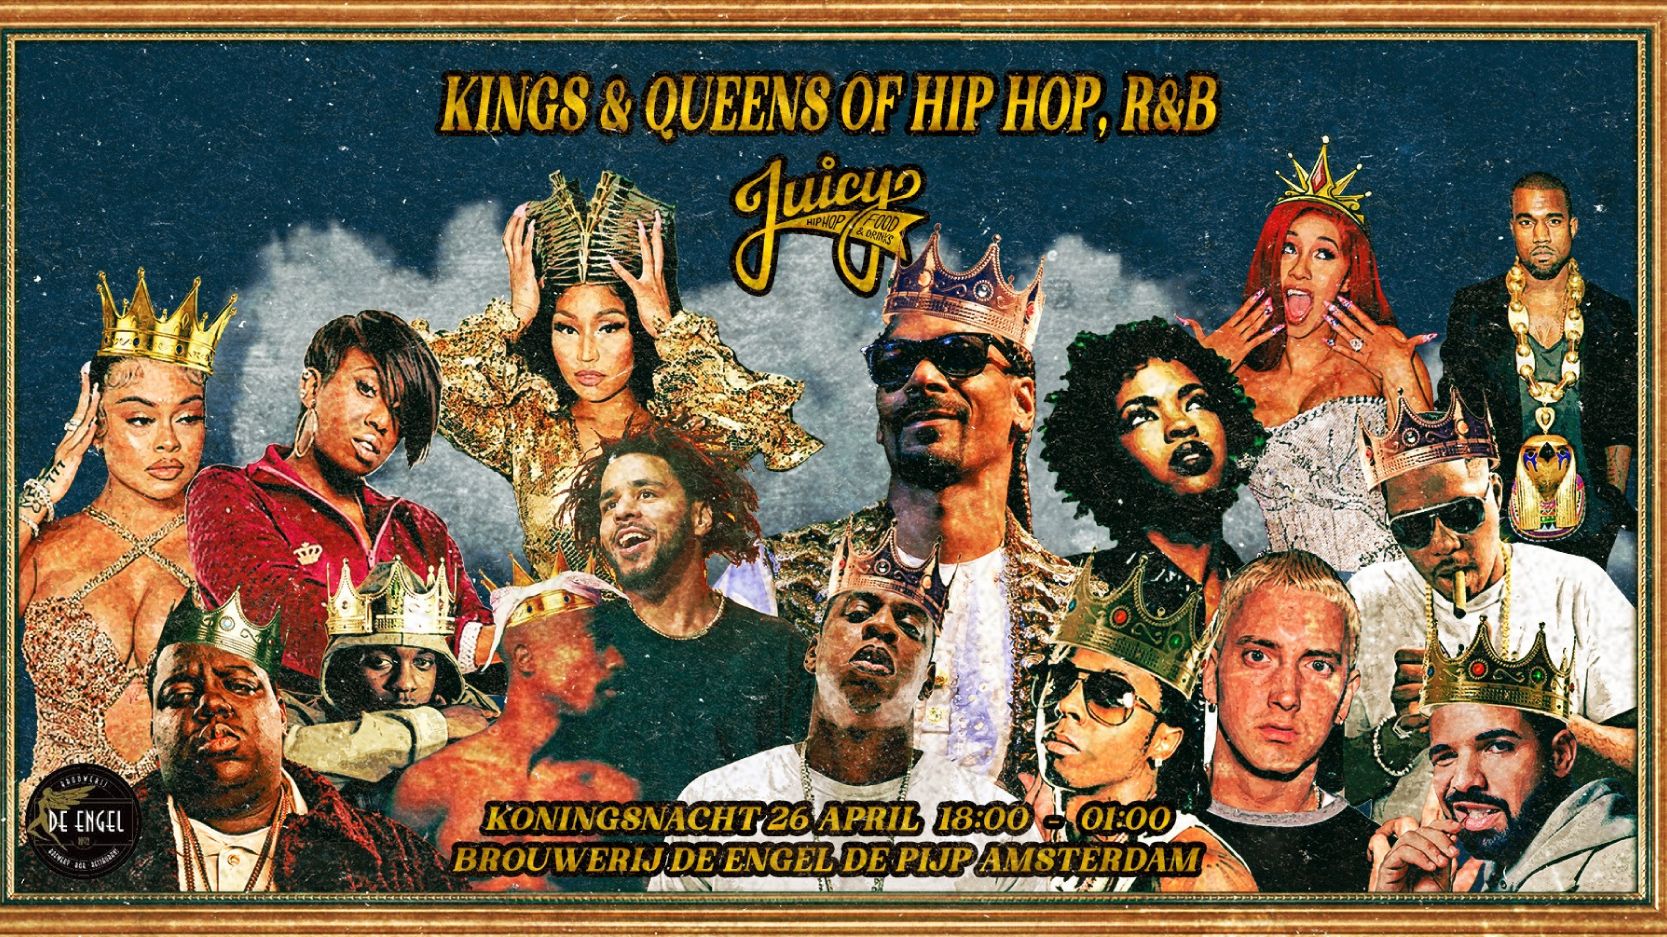 Juicy Koningsnacht: Kings & Queens of Hiphop cover